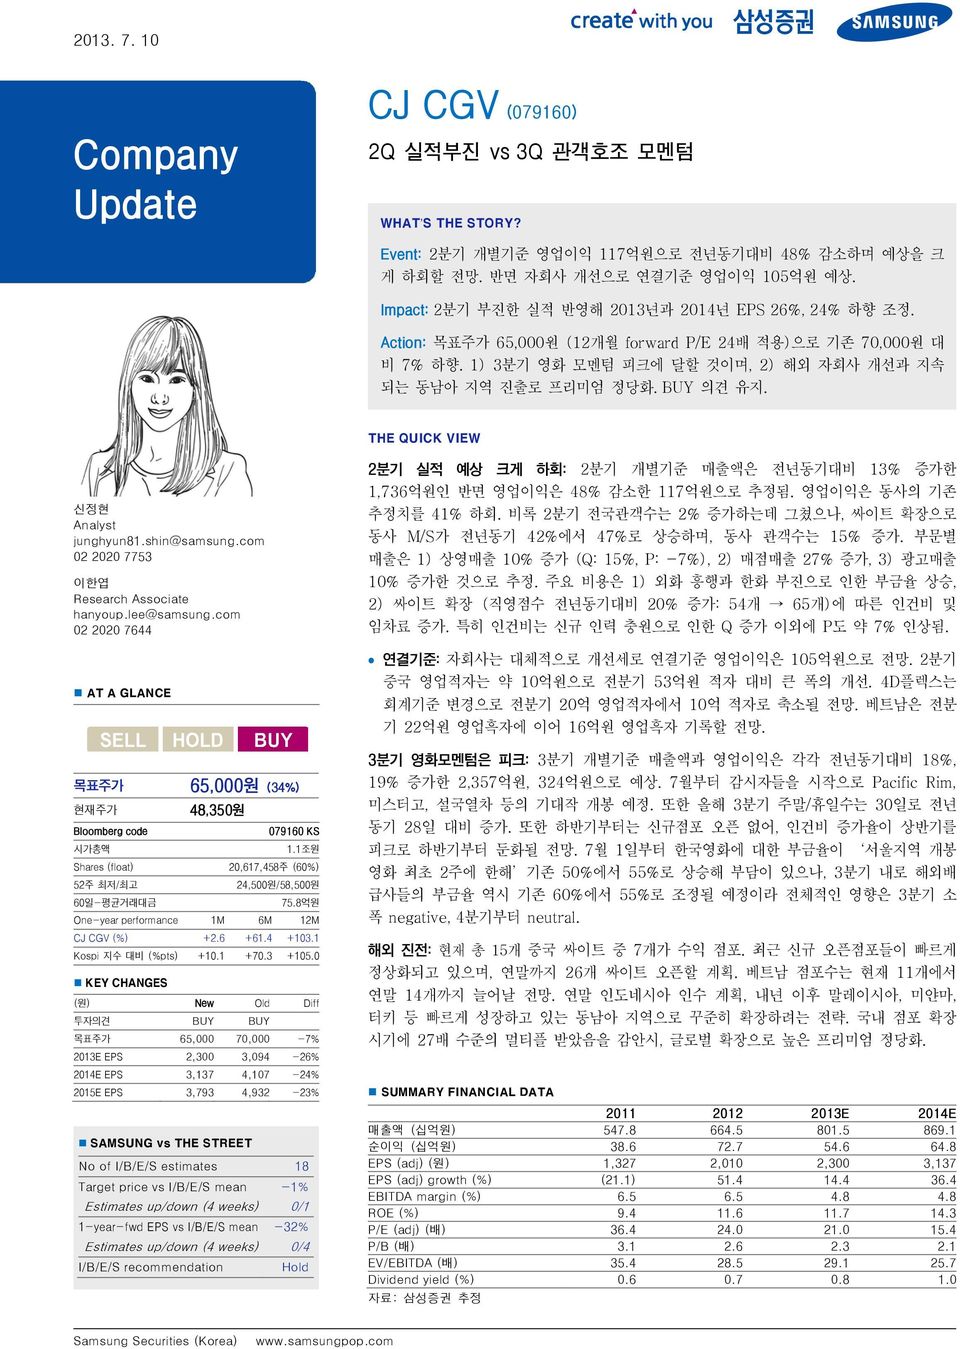 THE QUICK VIEW 신정현 Analyst junghyun81.shin@samsung.com 2 22 7753 이한엽 Research Associate hanyoup.lee@samsung.